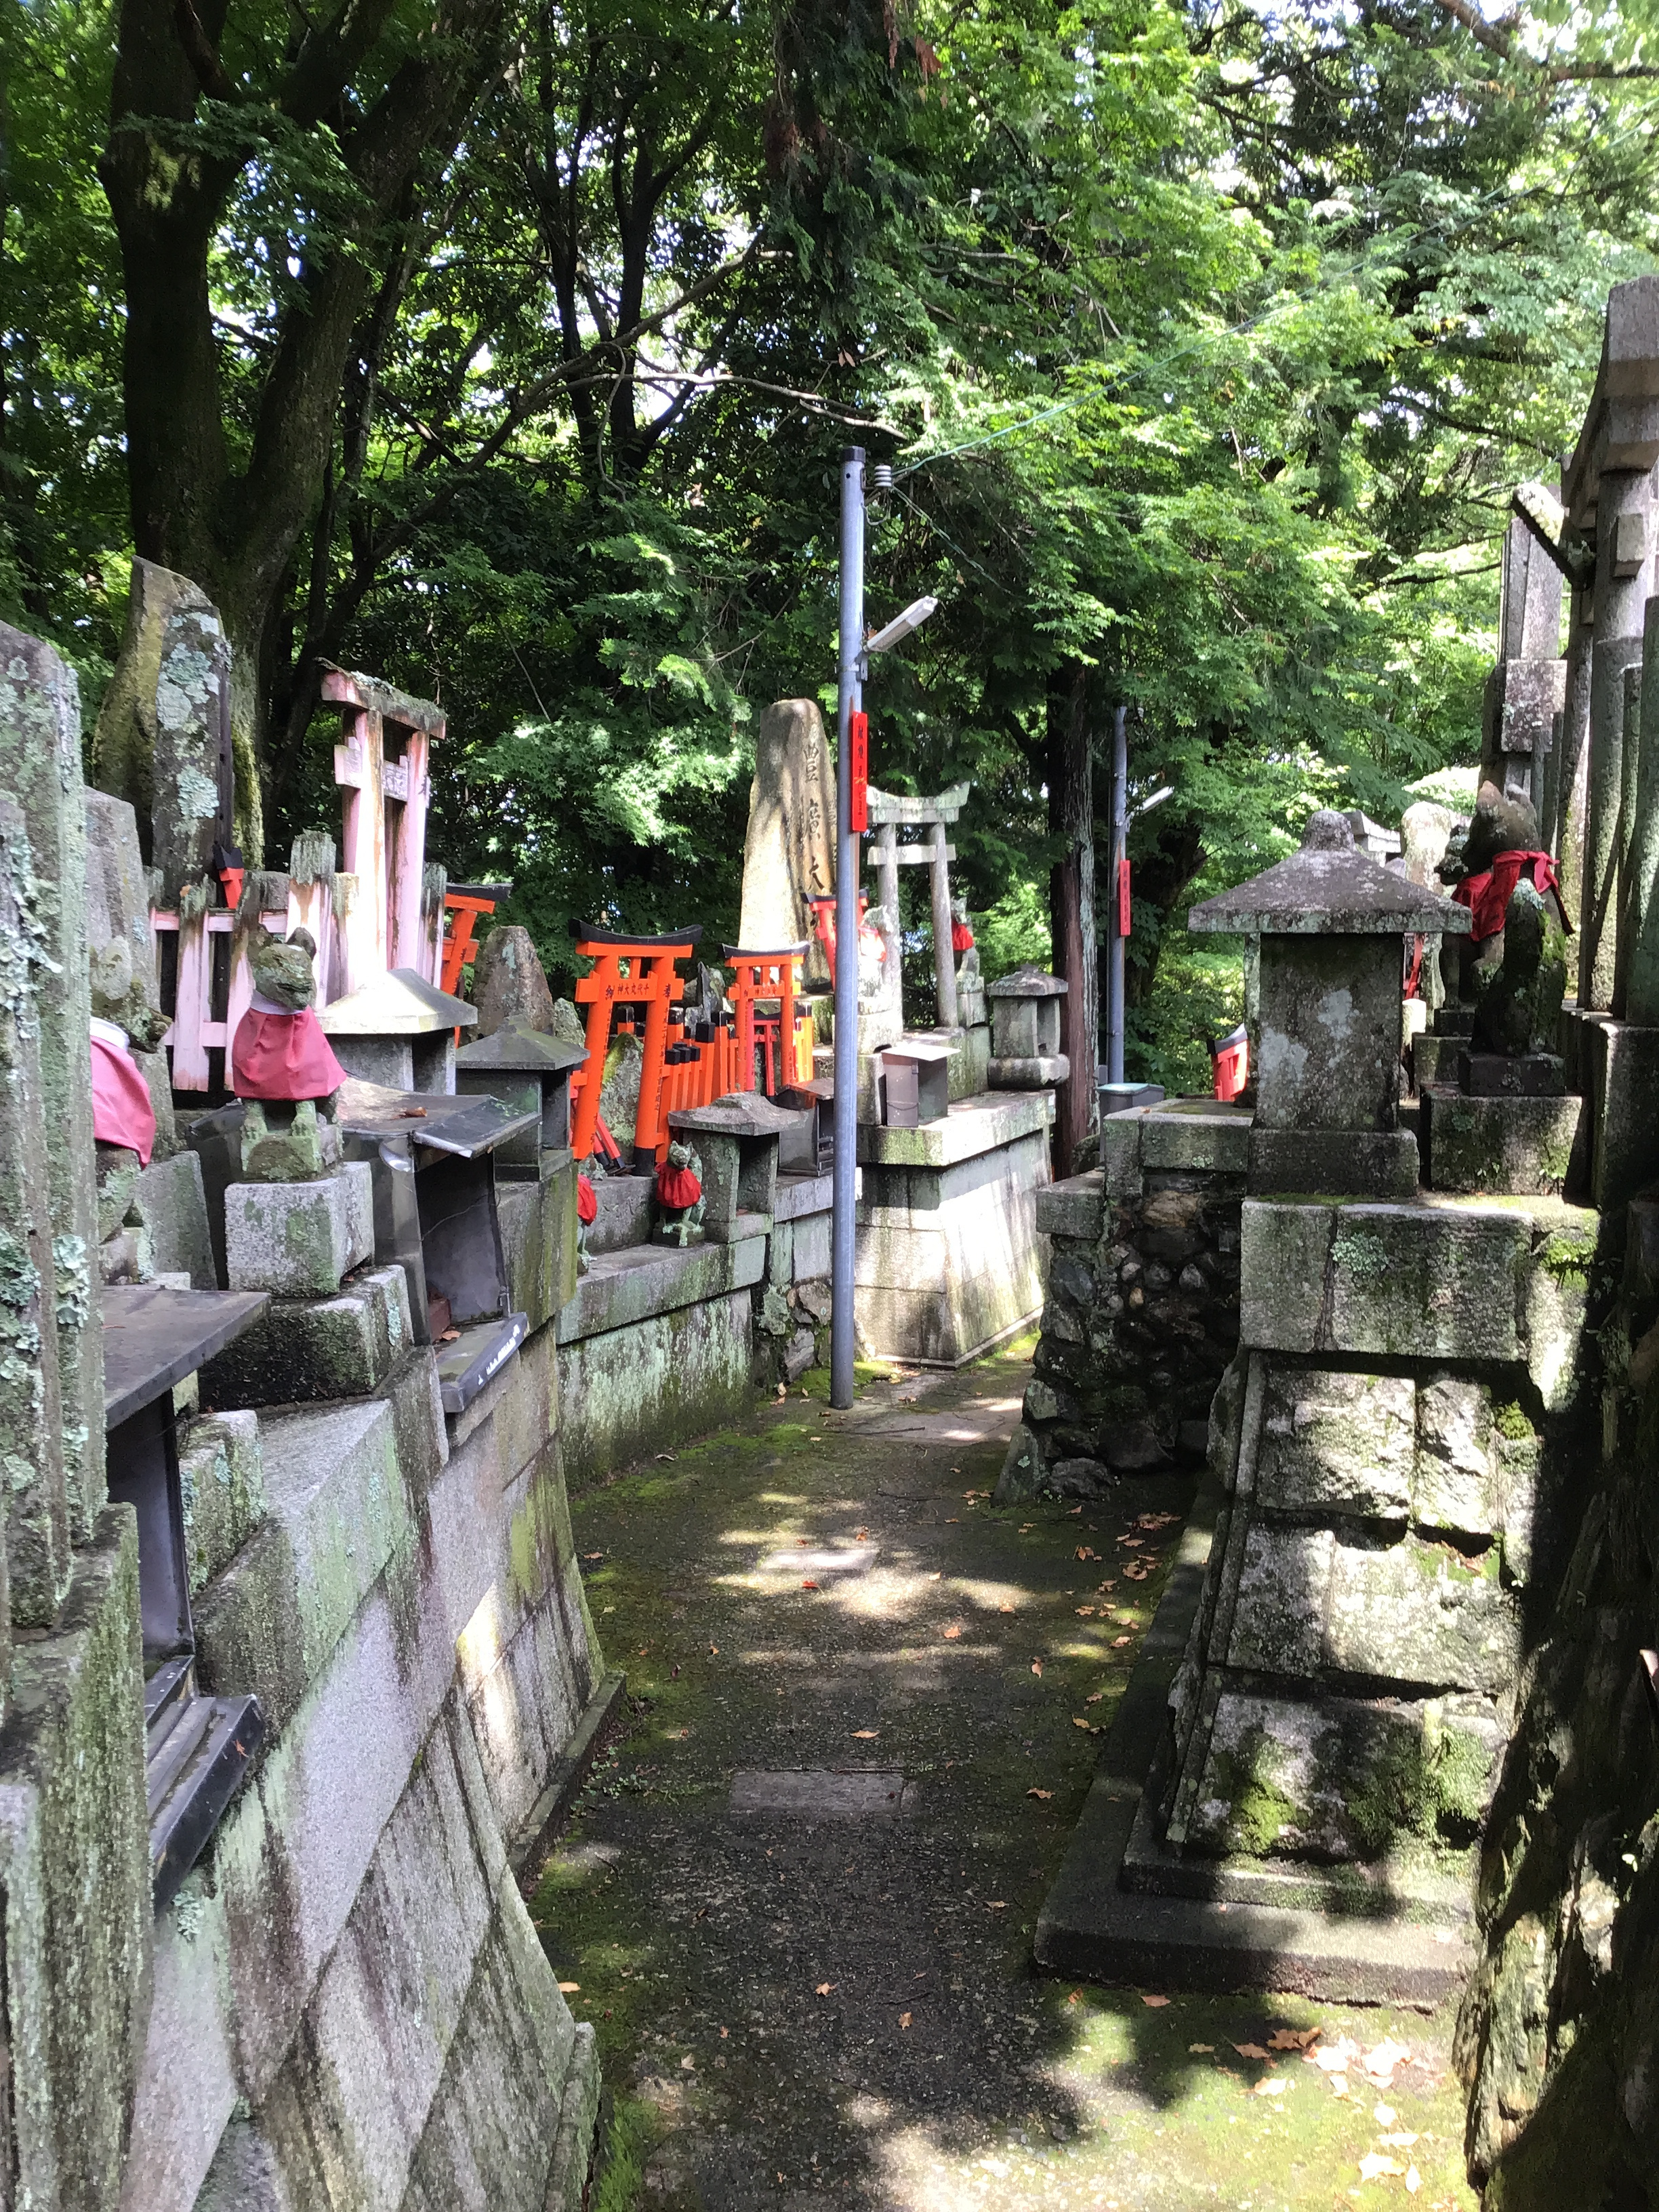 smaller torii gates near individual shrines